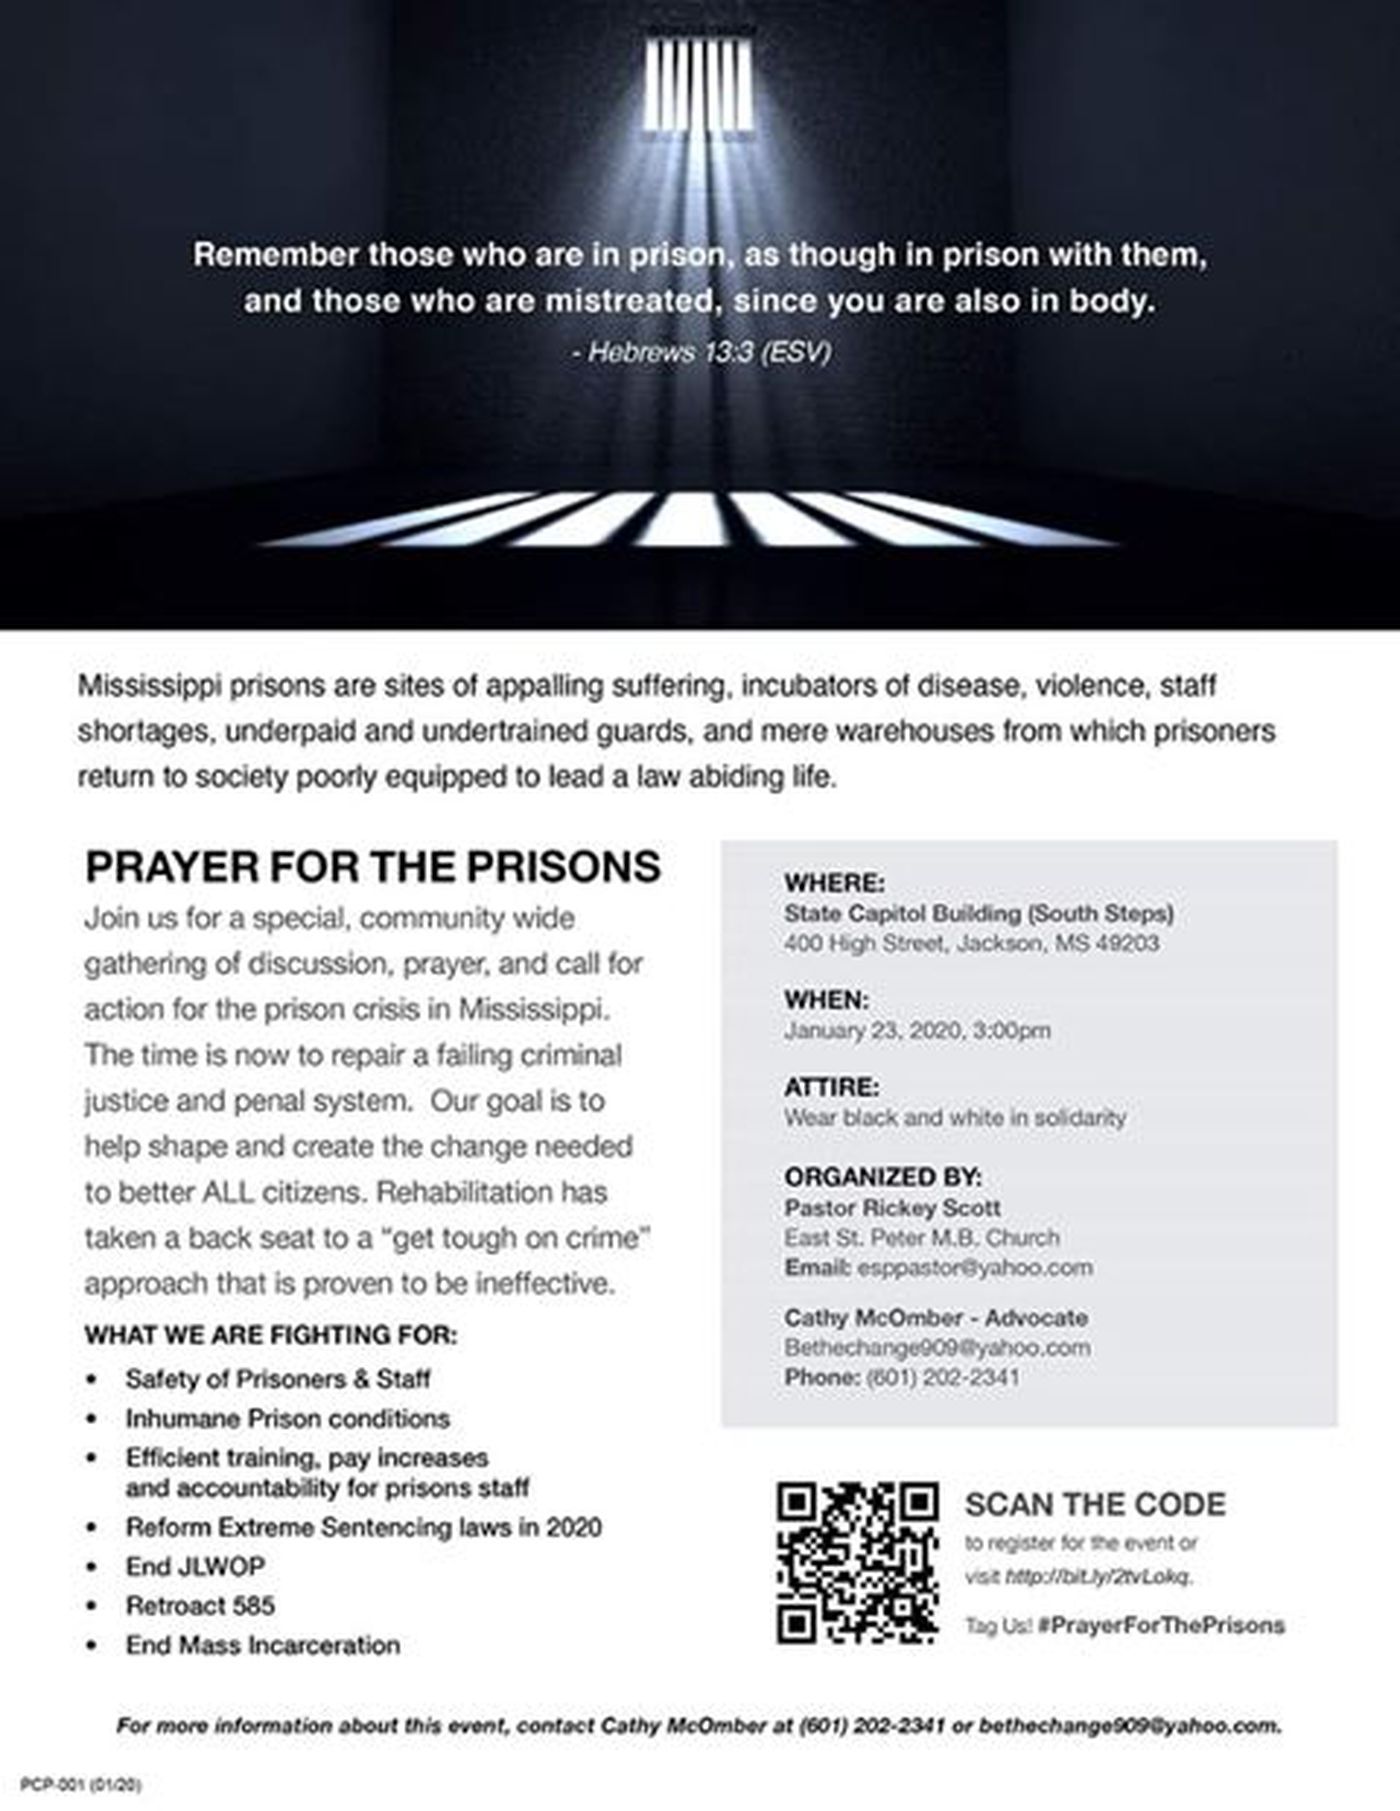 Prayer for the Prisons flyer